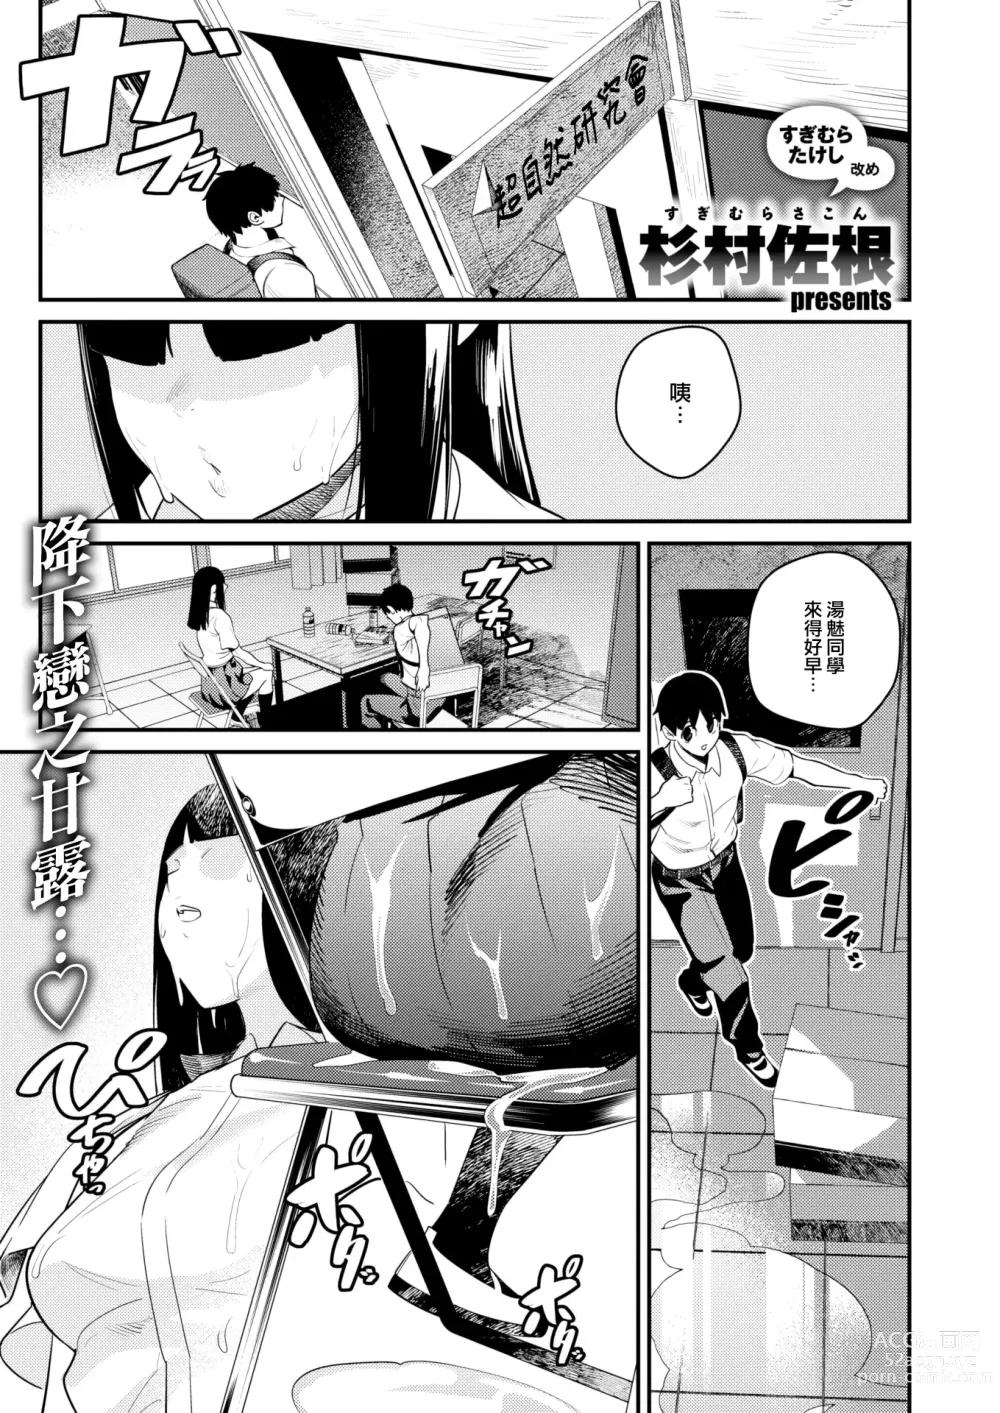 Page 2 of manga Kaijin Netsuai Mokushiroku